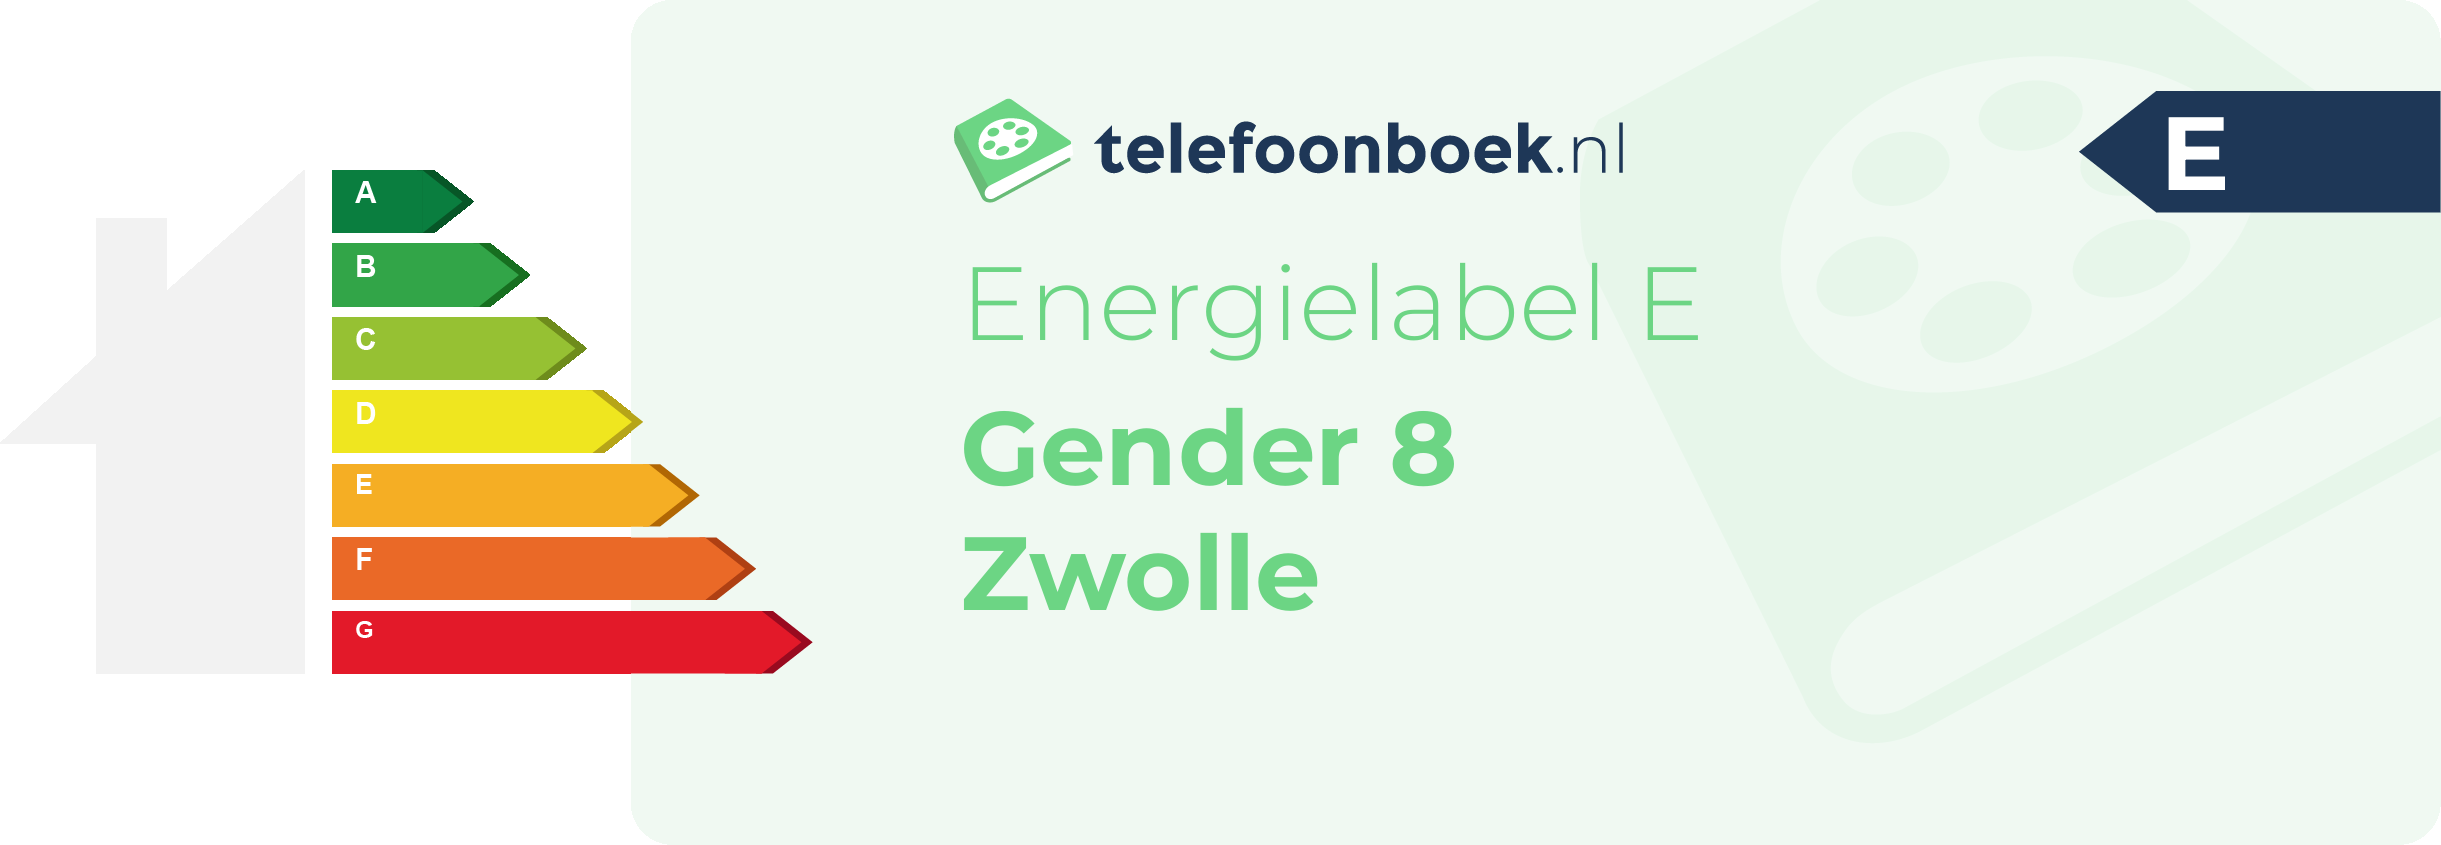 Energielabel Gender 8 Zwolle